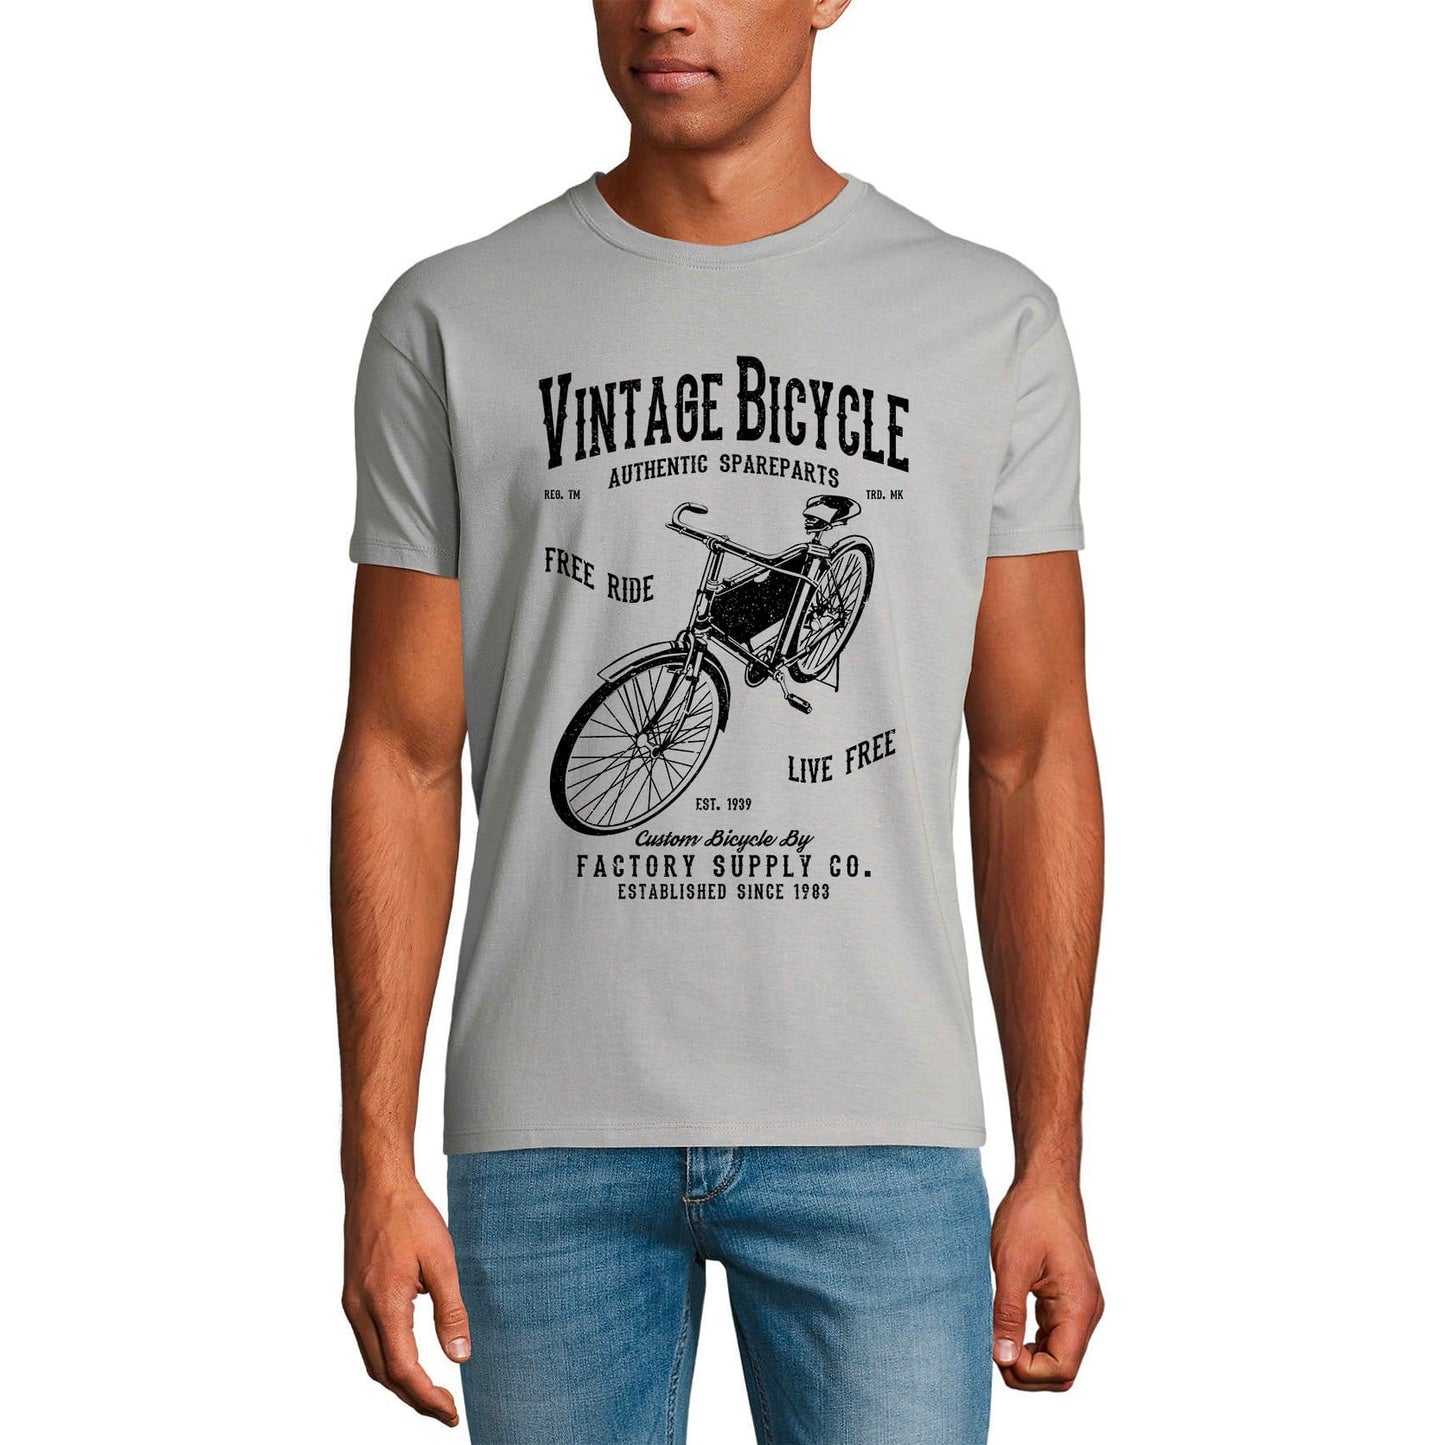 ULTRABASIC Men's T-Shirt Vintage Bicycle - Custom Bicycle Since 1983 Tee Shirt